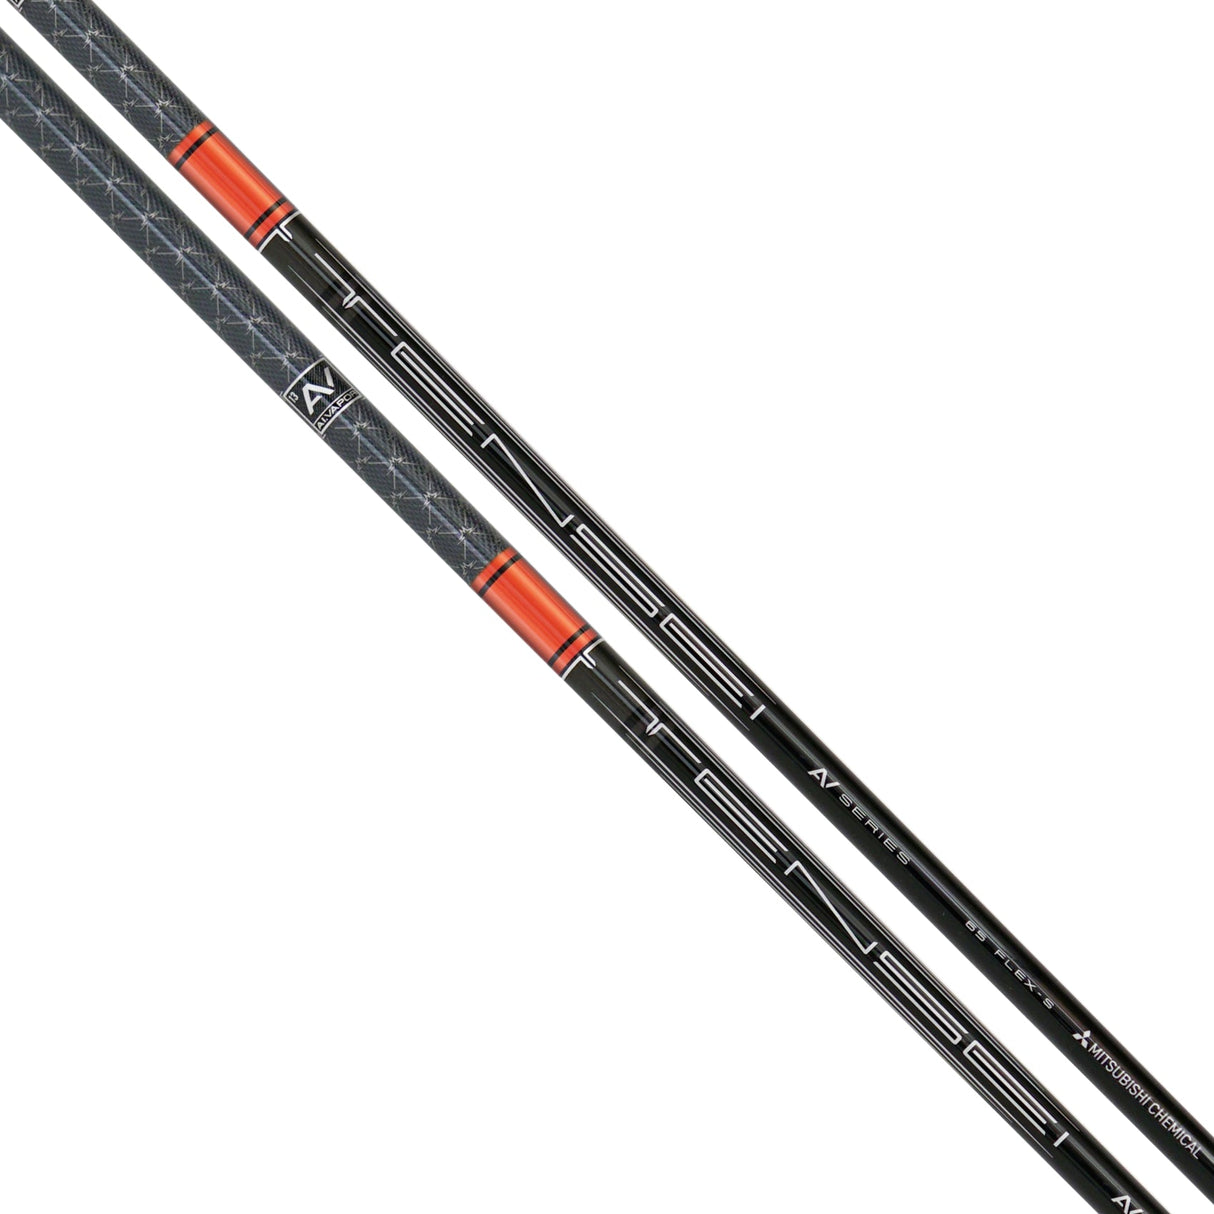 Mitsubishi TENSEI AV Series with XLINK Orange Graphite Shaft